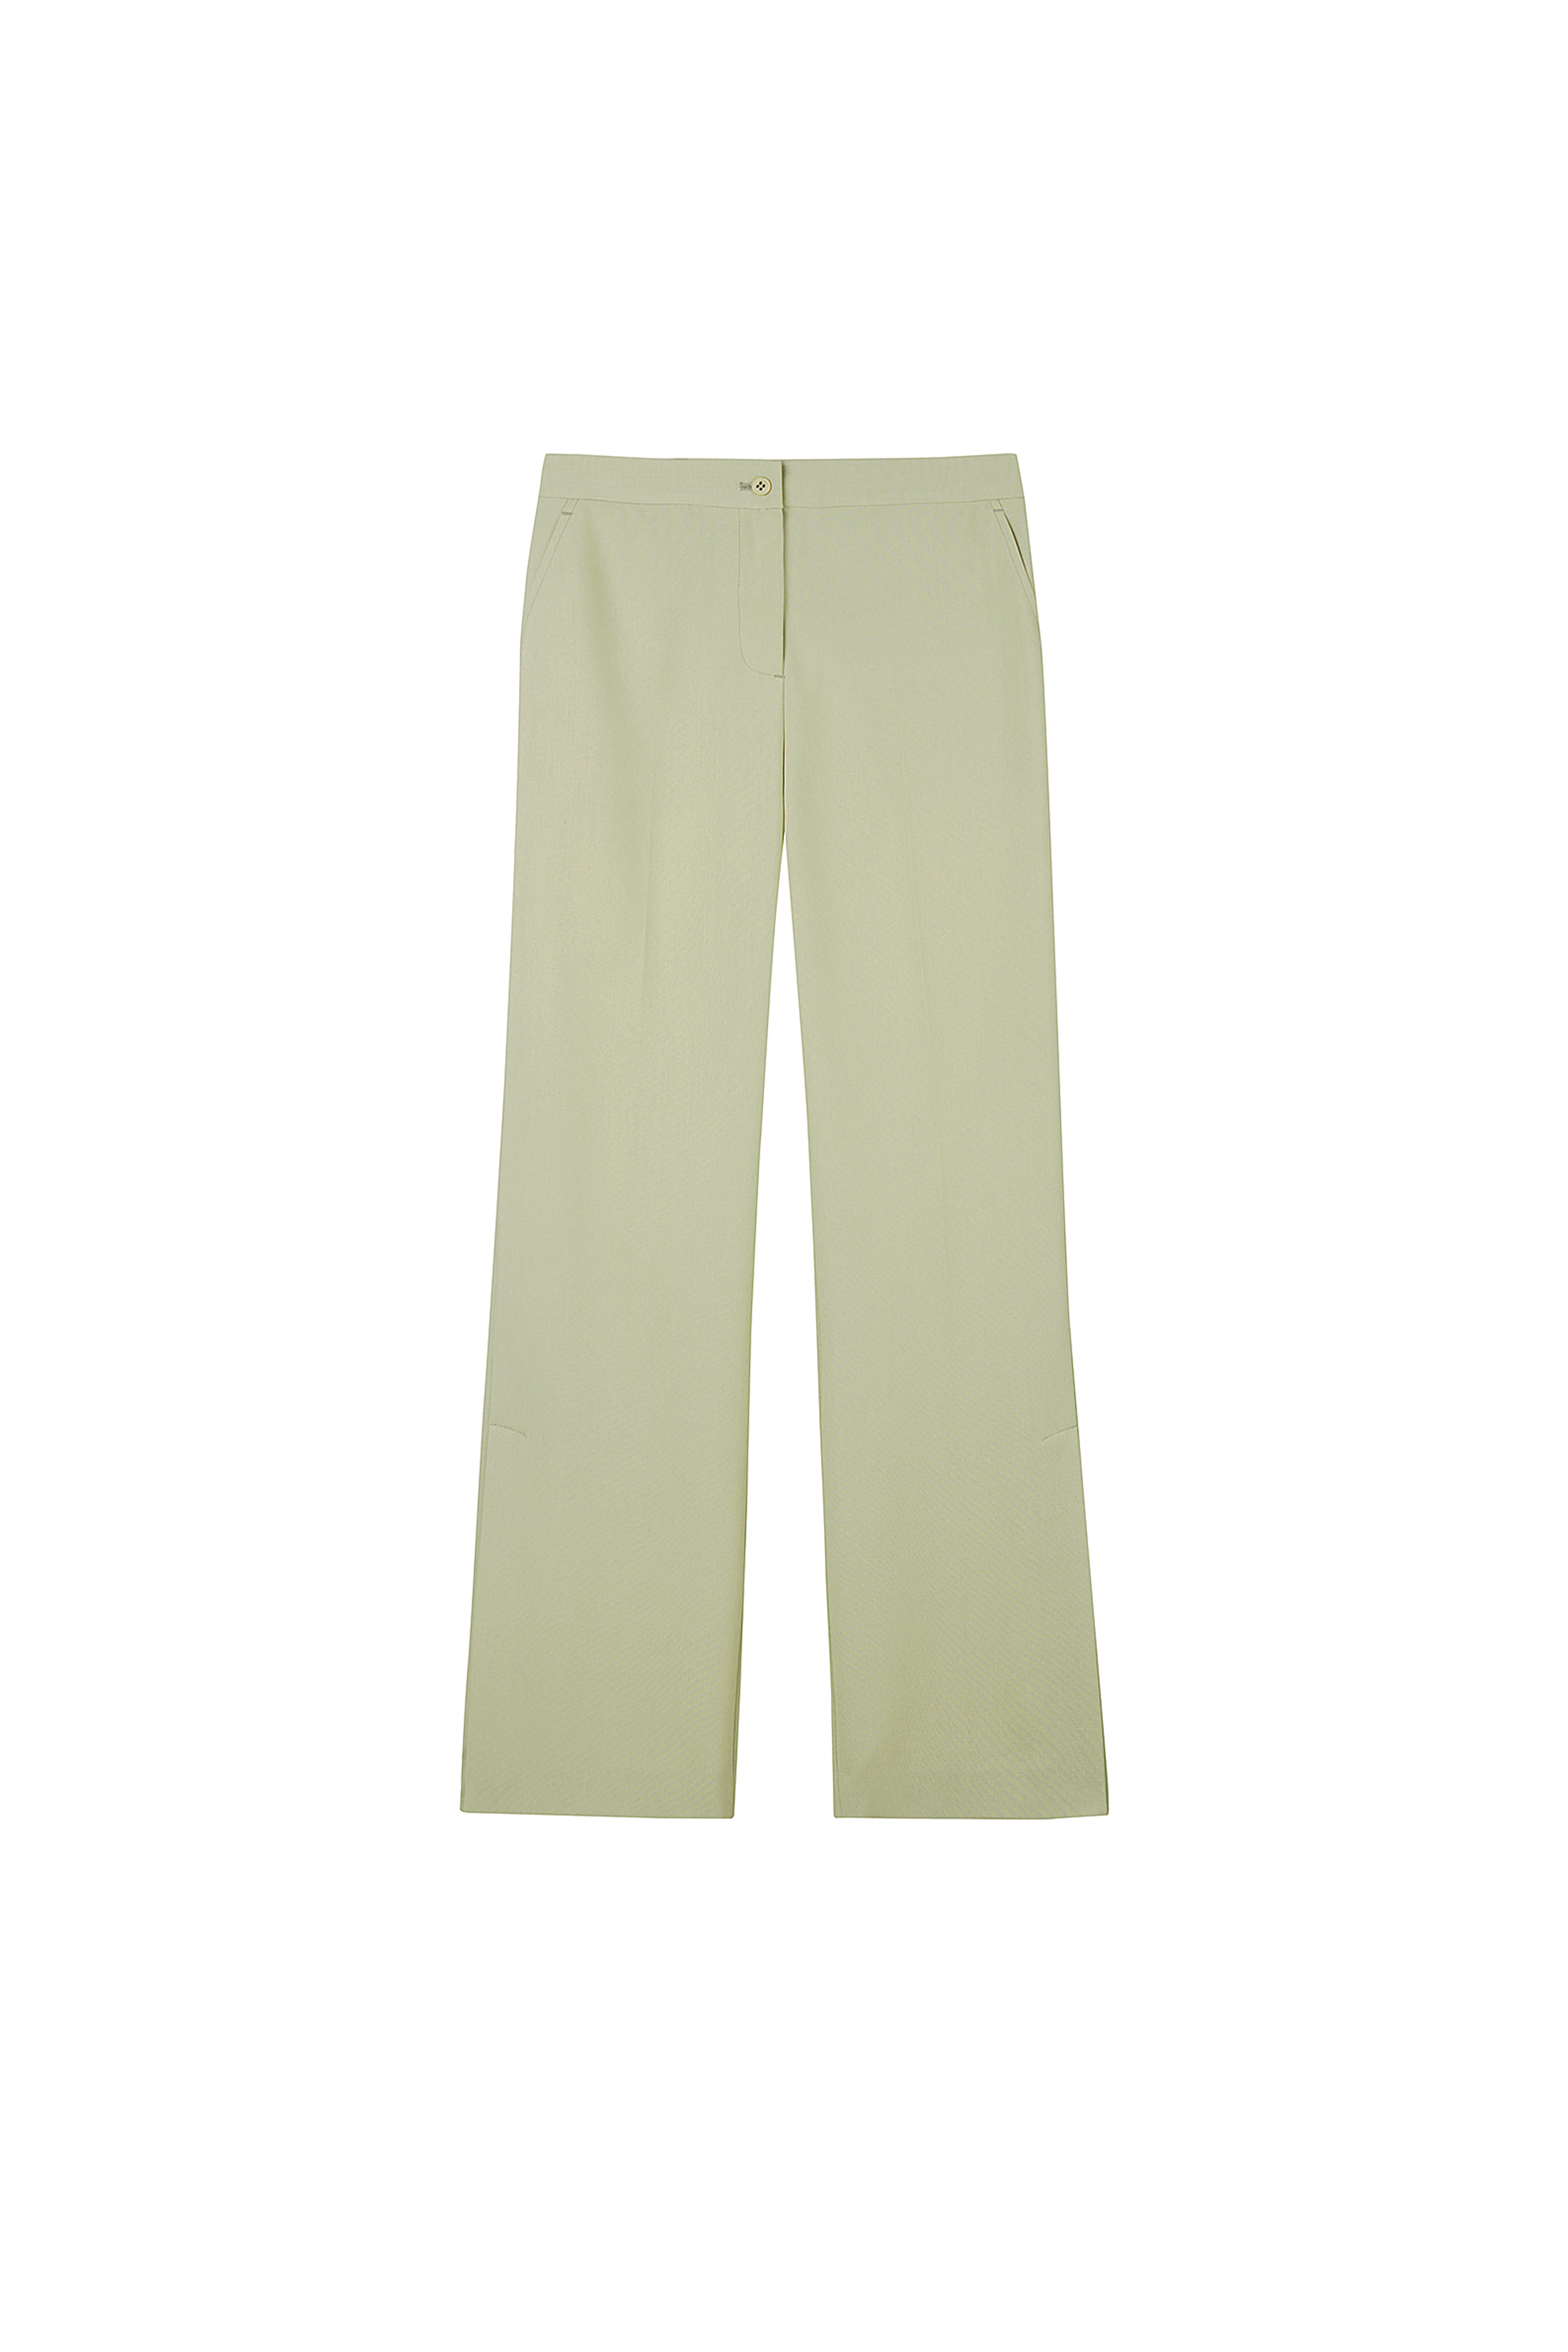 2nd) Slit Semi-Flare Pants Olive